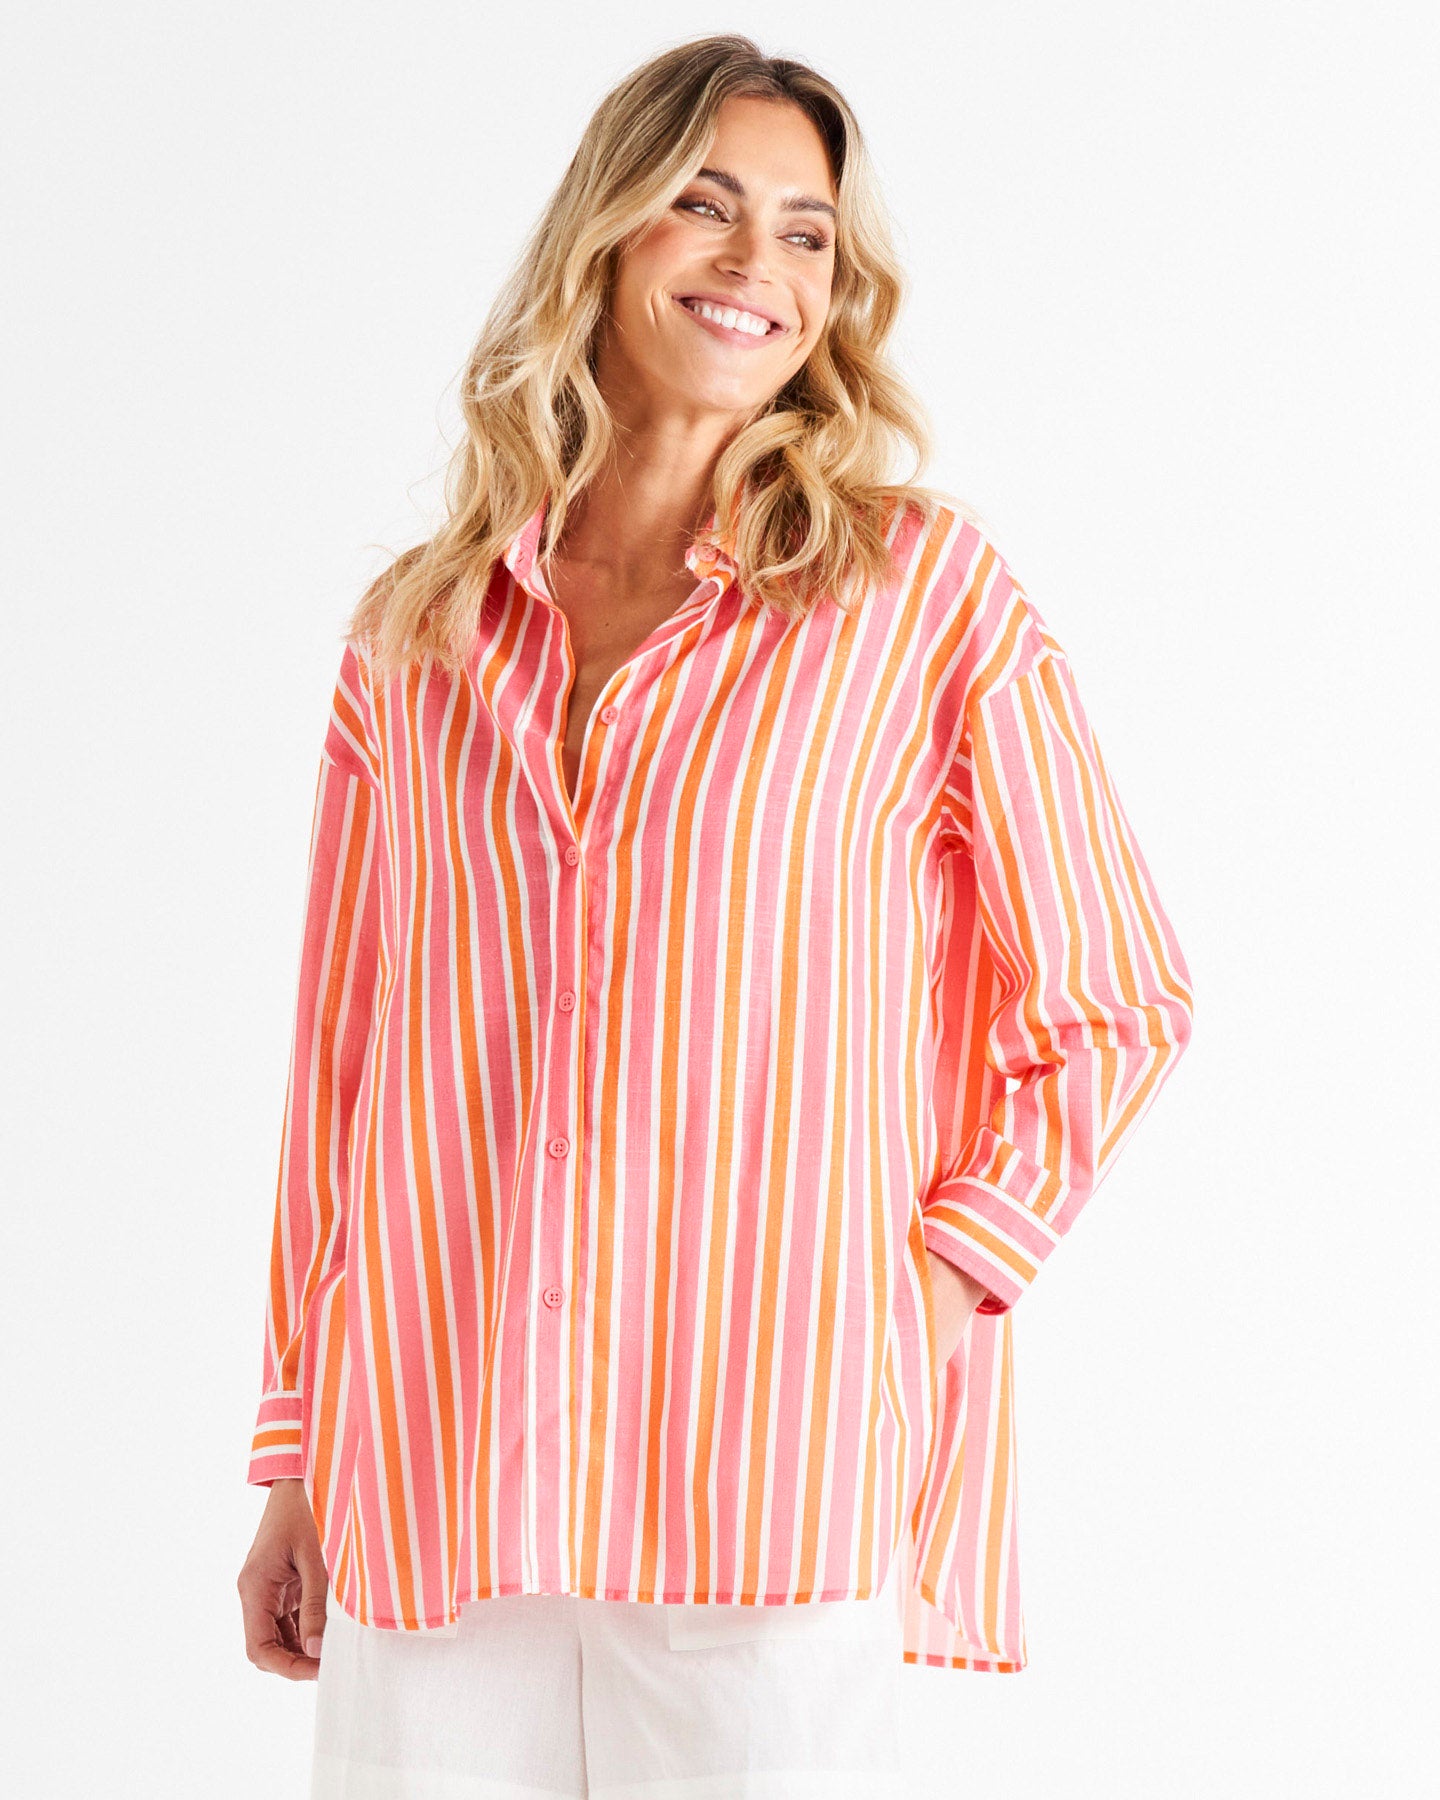 Quinn Oversized Relaxed Button-Up Cotton Shirt - Sundown Stripe Pink/Orange